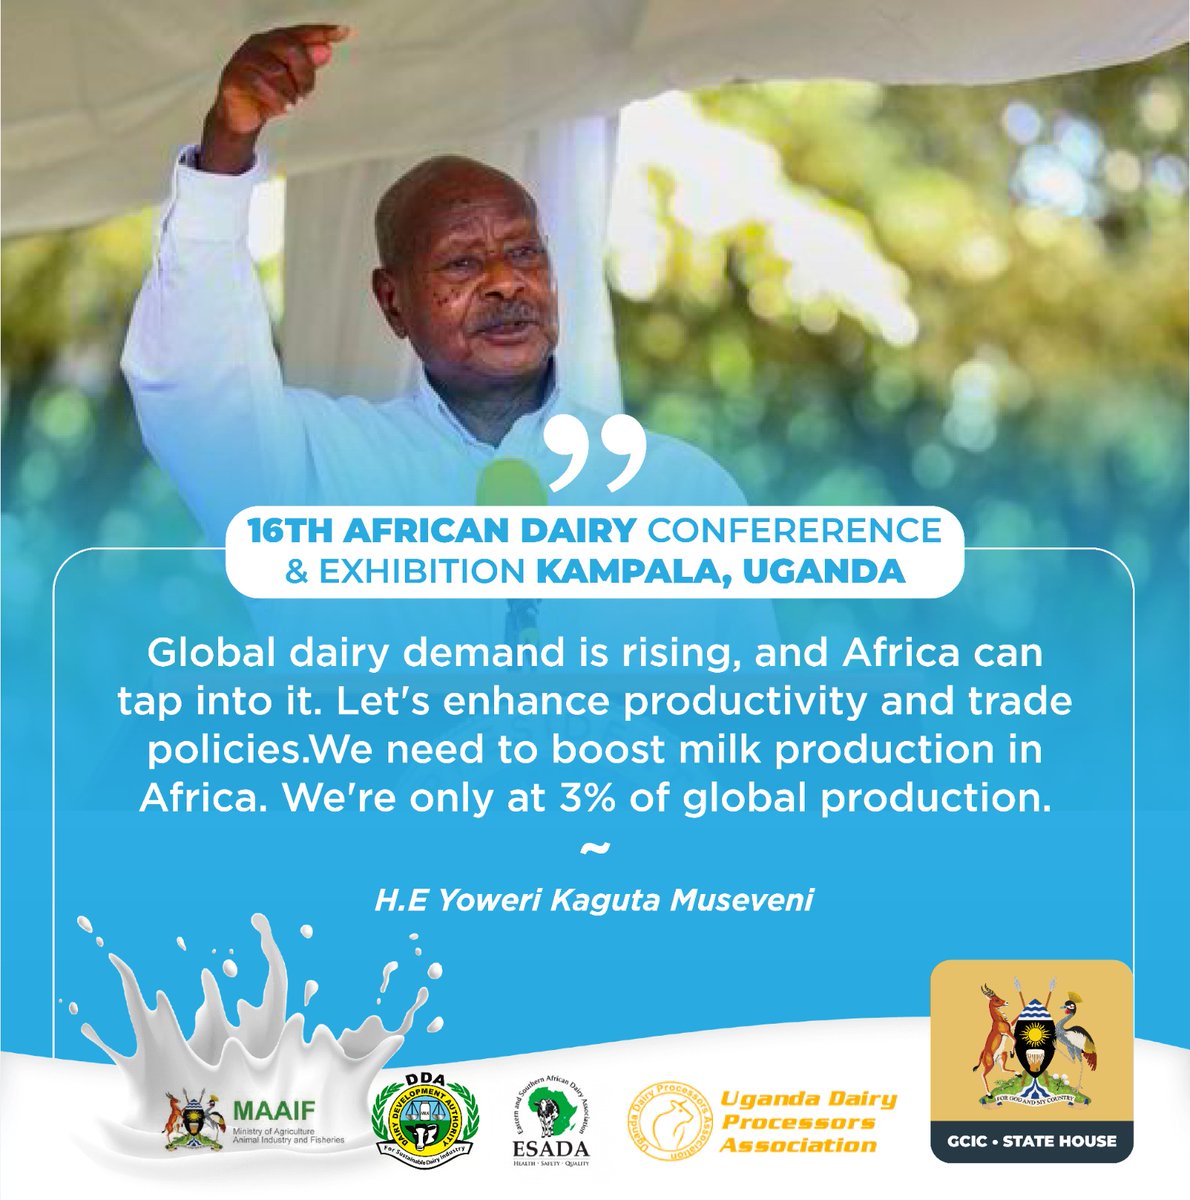 @JustineLumumba @DDAUganda @MAAIF_Uganda @FrankTumwebazek @MpiiraSamson @MKarekye @GovUganda @Charlie_Kemi @jesadairy @Heifer @SharpMugabe @woira_michael @KagutaMuseveni @naads_ug 'Global dairy demand is rising and Africa can tap into it , let's enhance productivity and trade policies we need to boost milk production in Africa we are only at 3% of global production'-@KagutaMuseveni @DDAUganda @MAAIF_Uganda @FrankTumwebazek #AFDA2023